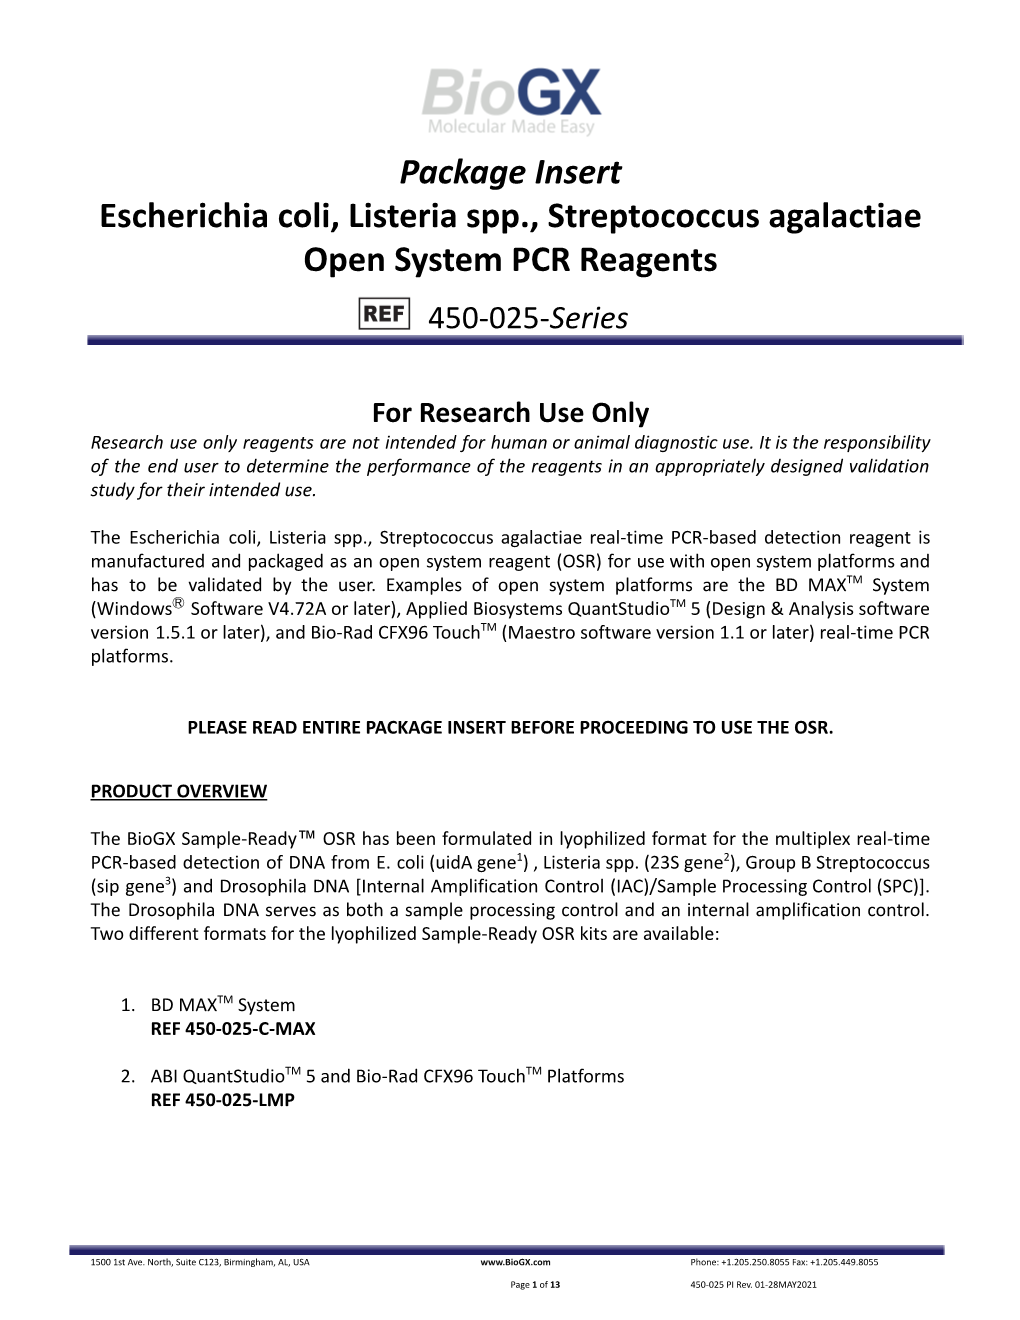 450-025-Series Escherichia Coli, Listeria Spp., Streptococcus